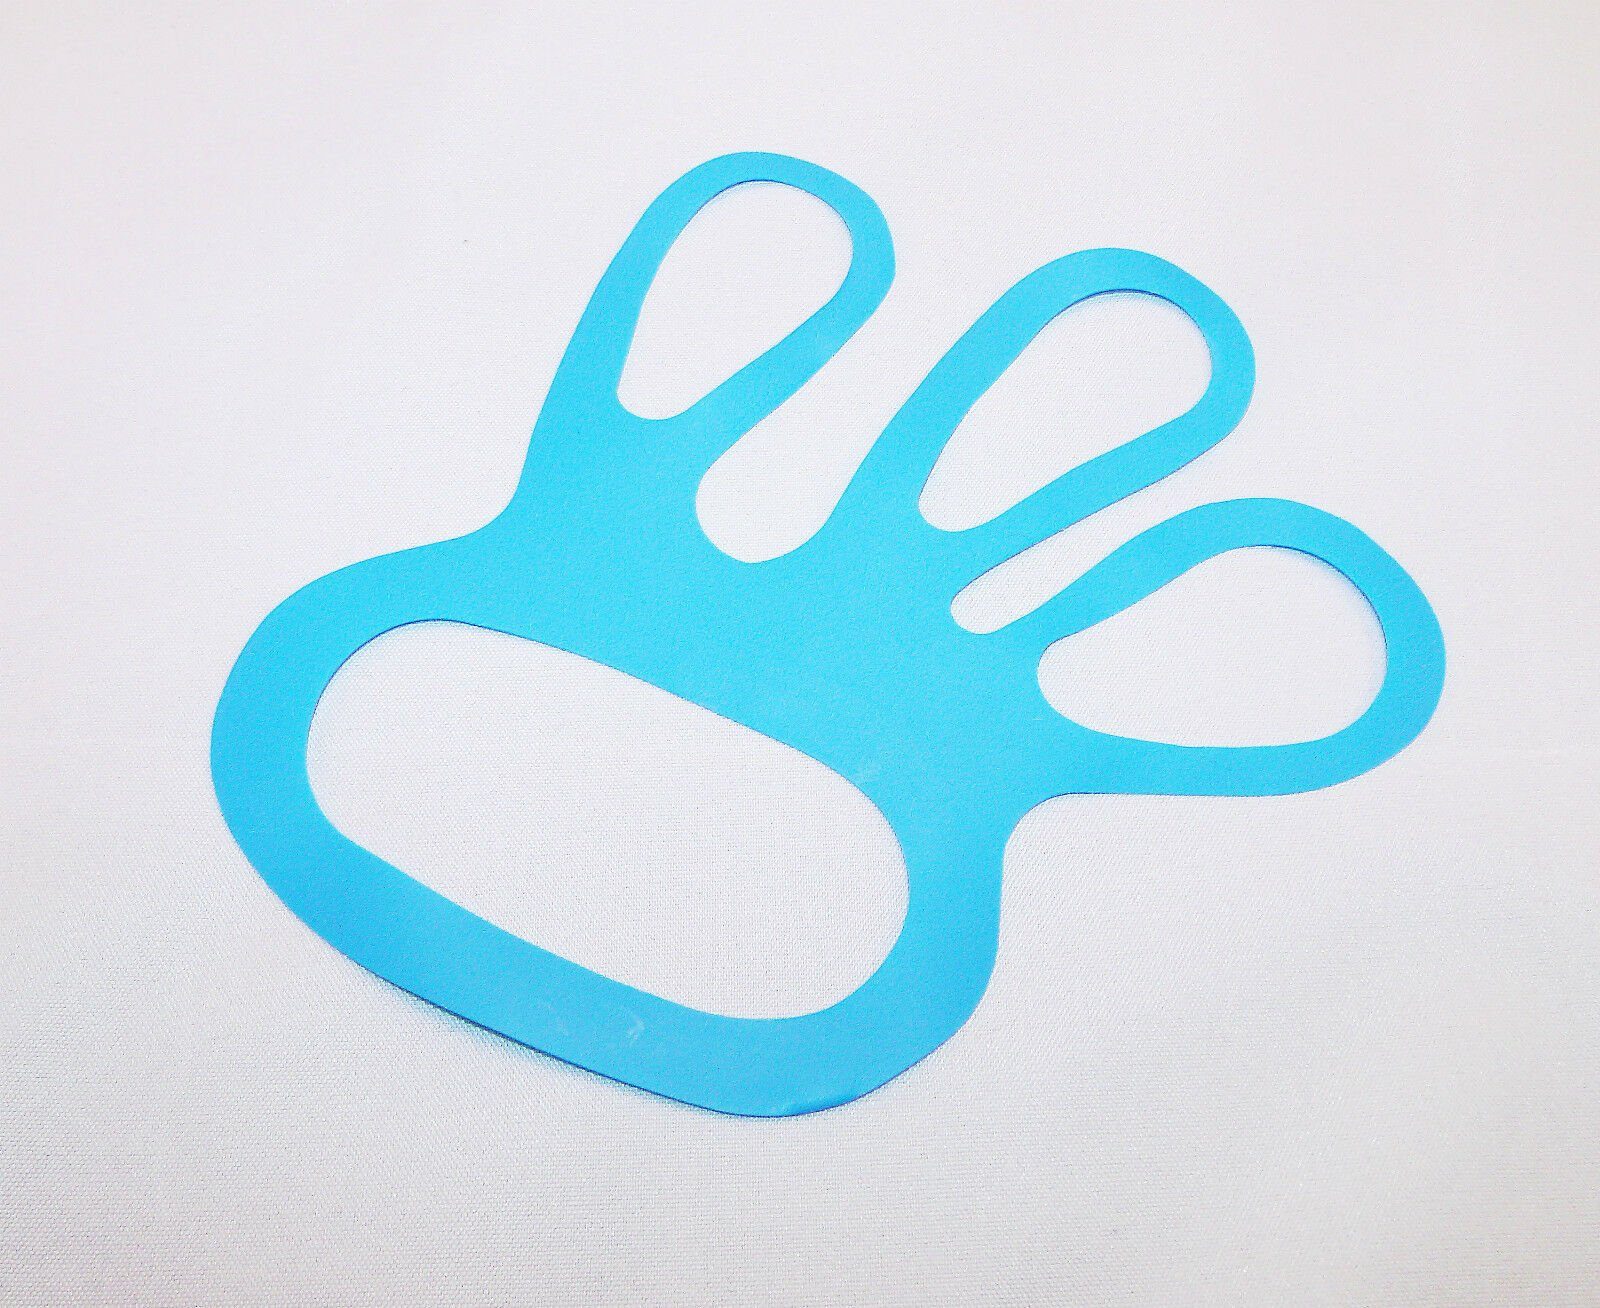 TronicXL Einweghandschuhe 2 x Fingerfix Fingerlinge blau Handschuhspanner Stechschutzhandschuh